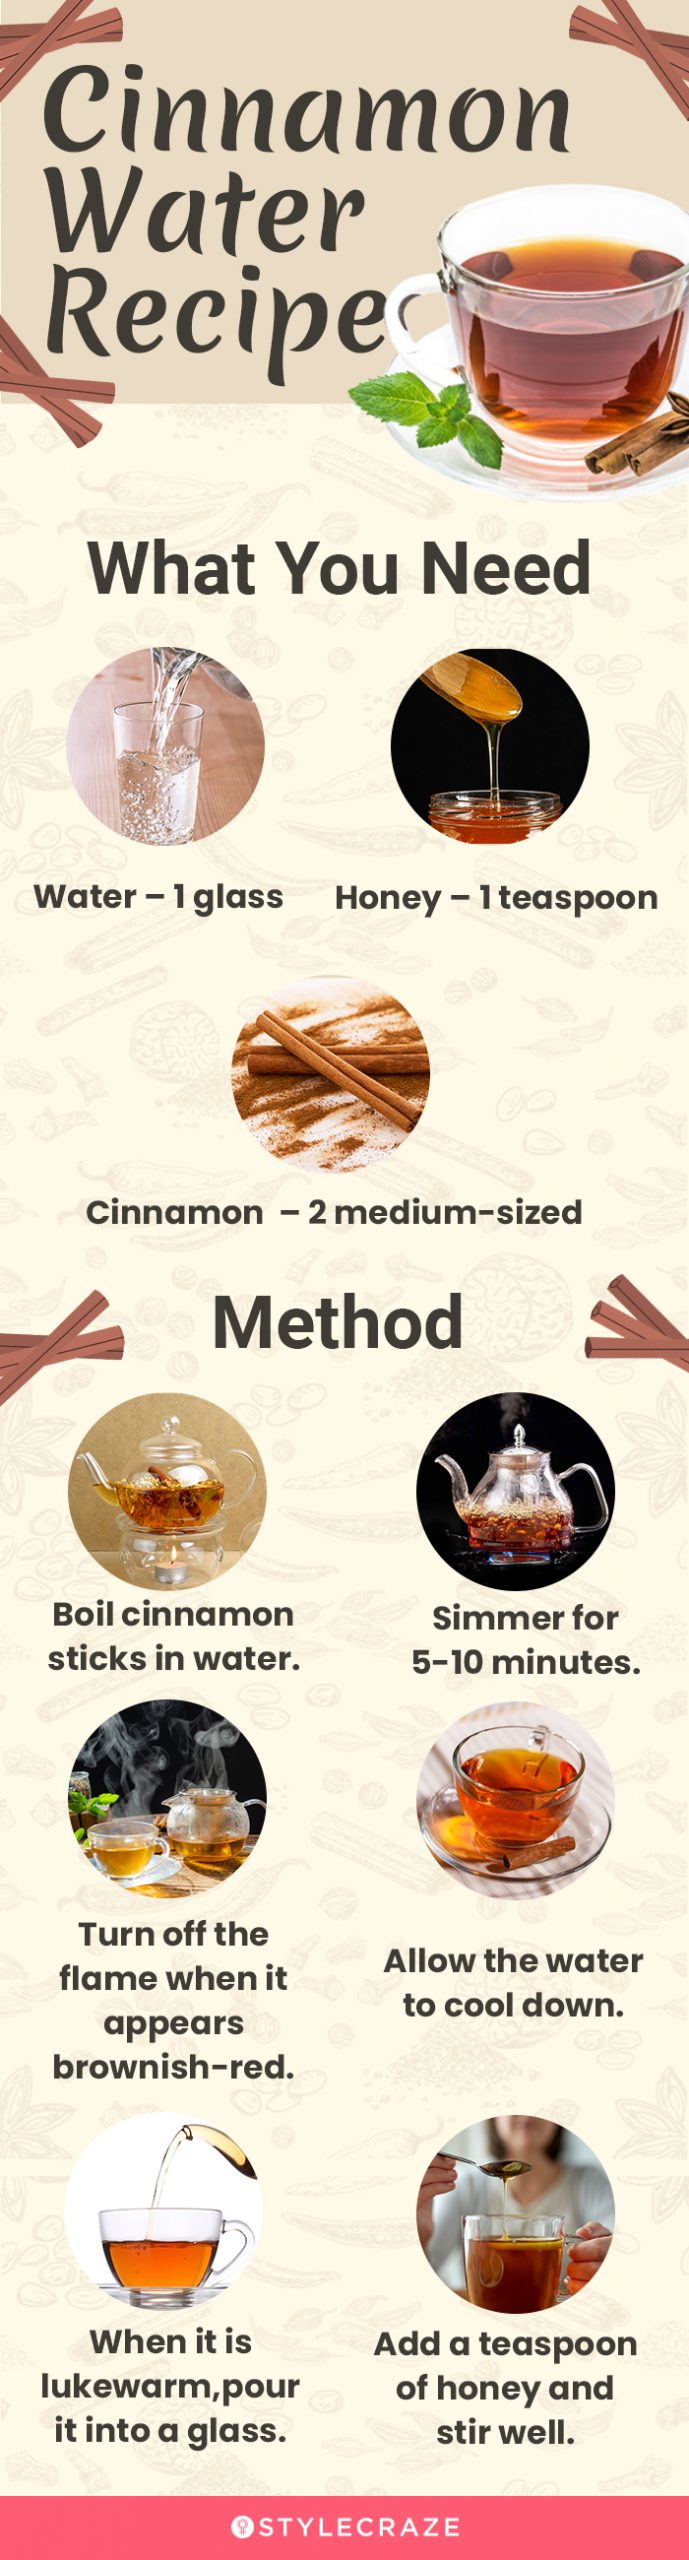 cinnamon water recipe [infographic]